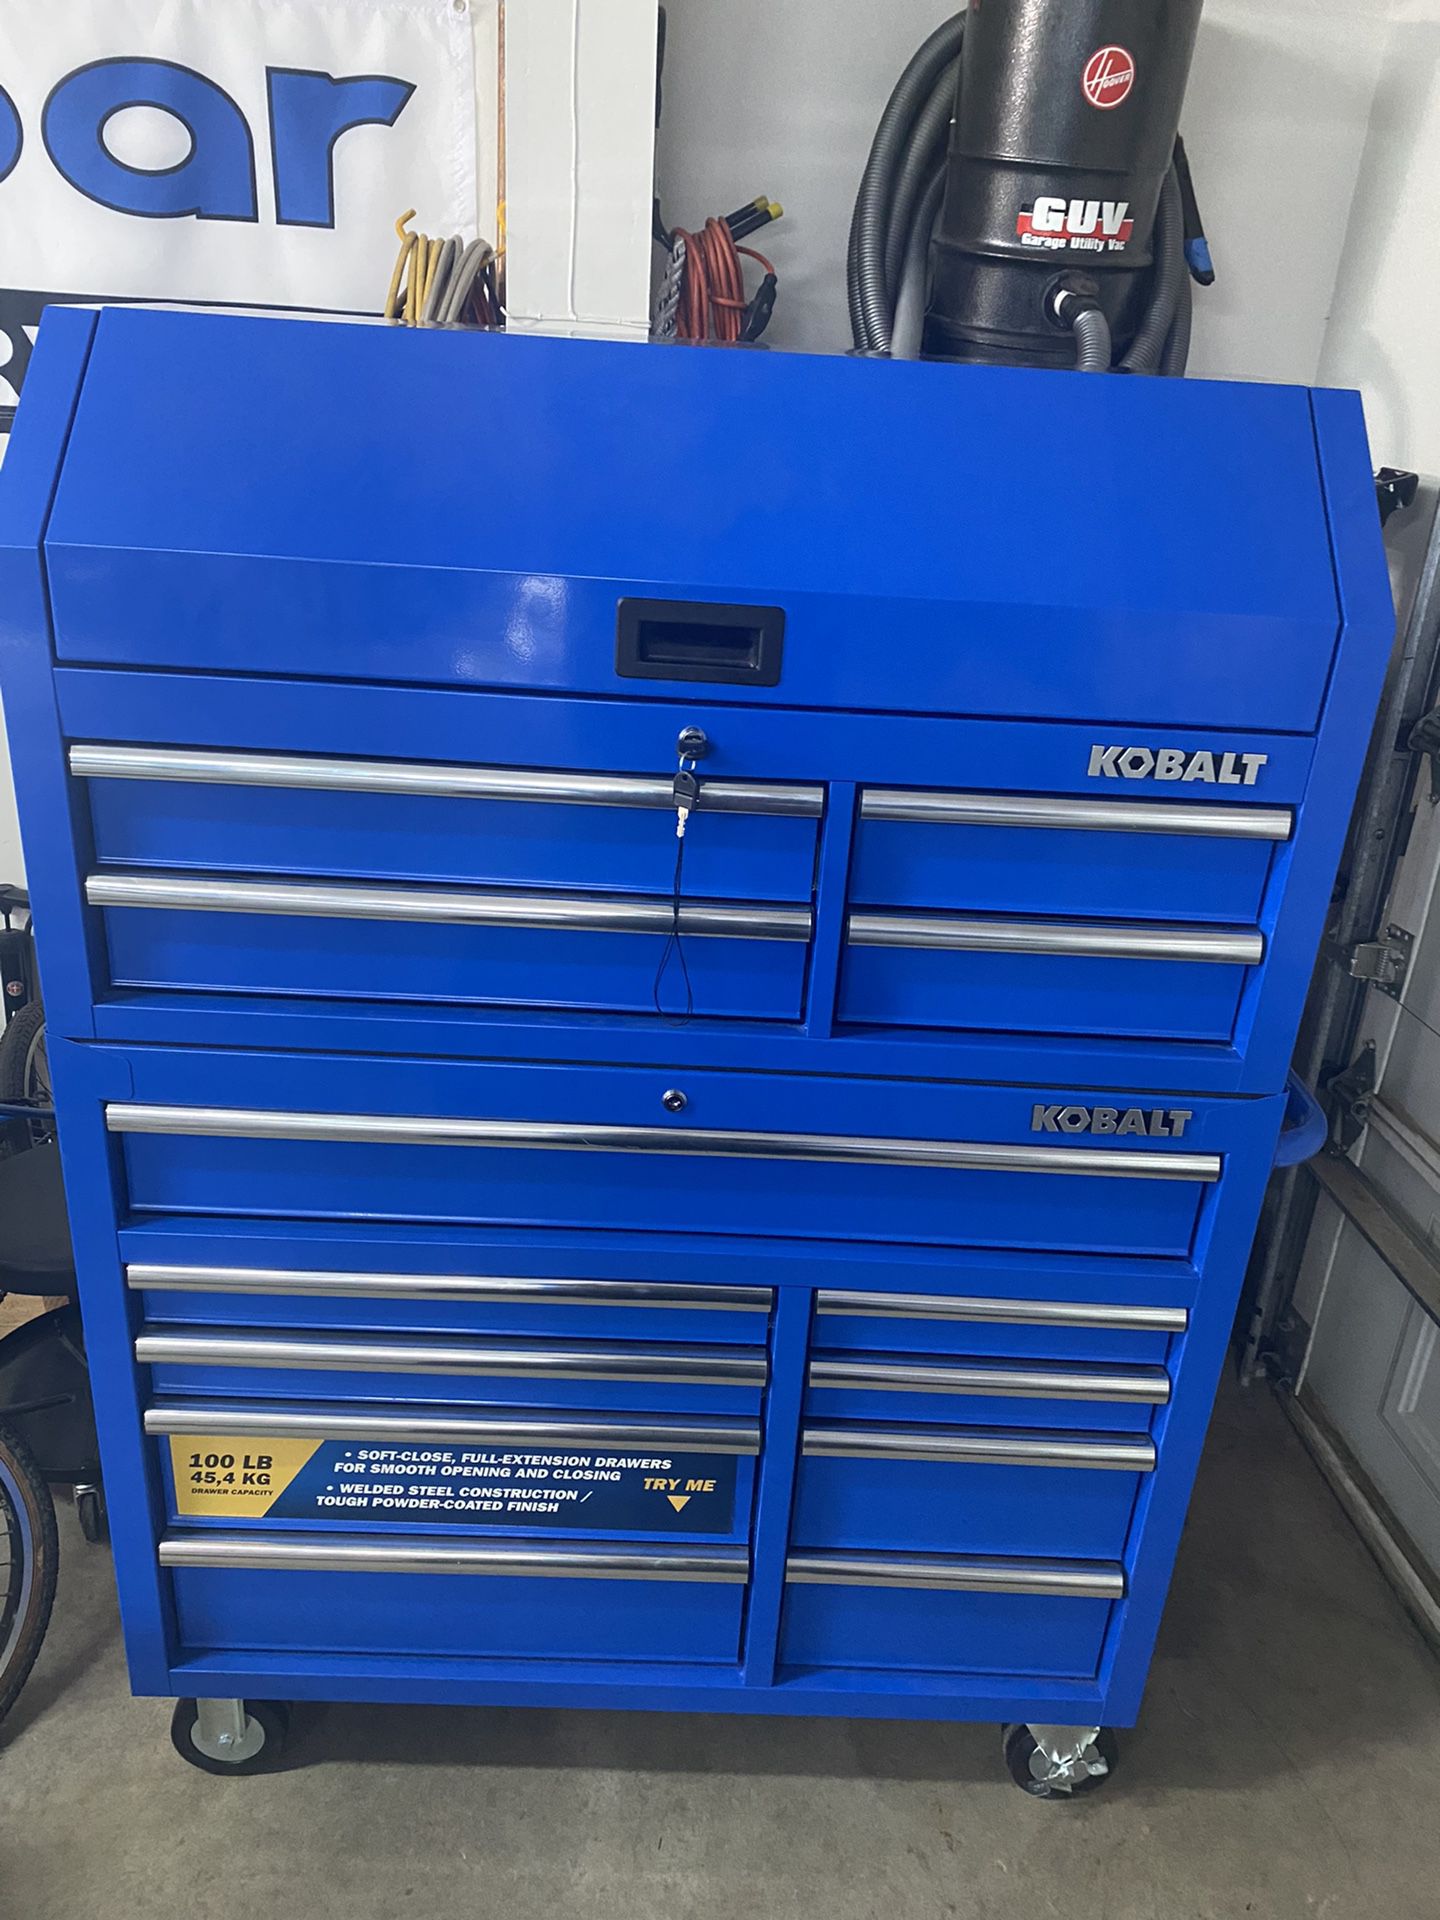 Kobalt Mini Tool Box Toolbox New for Sale in Riverside, CA - OfferUp